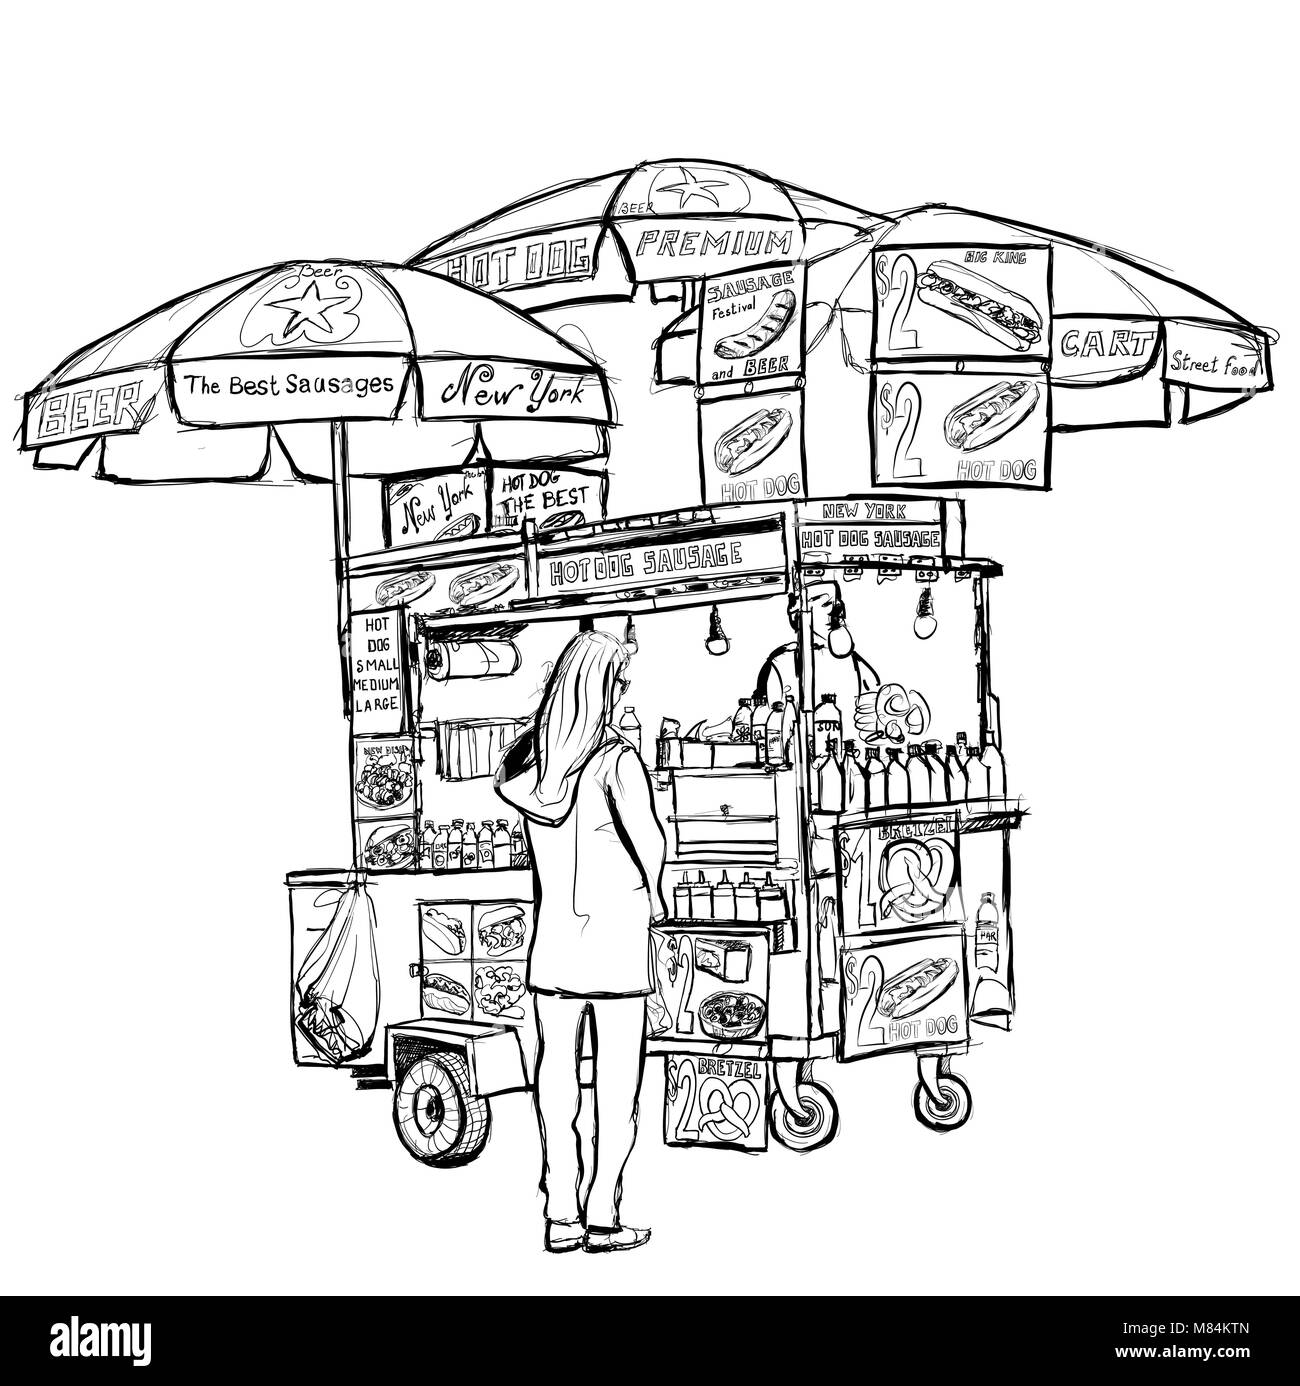 Hot dog street cart in New York - vector illustration Stock Vector